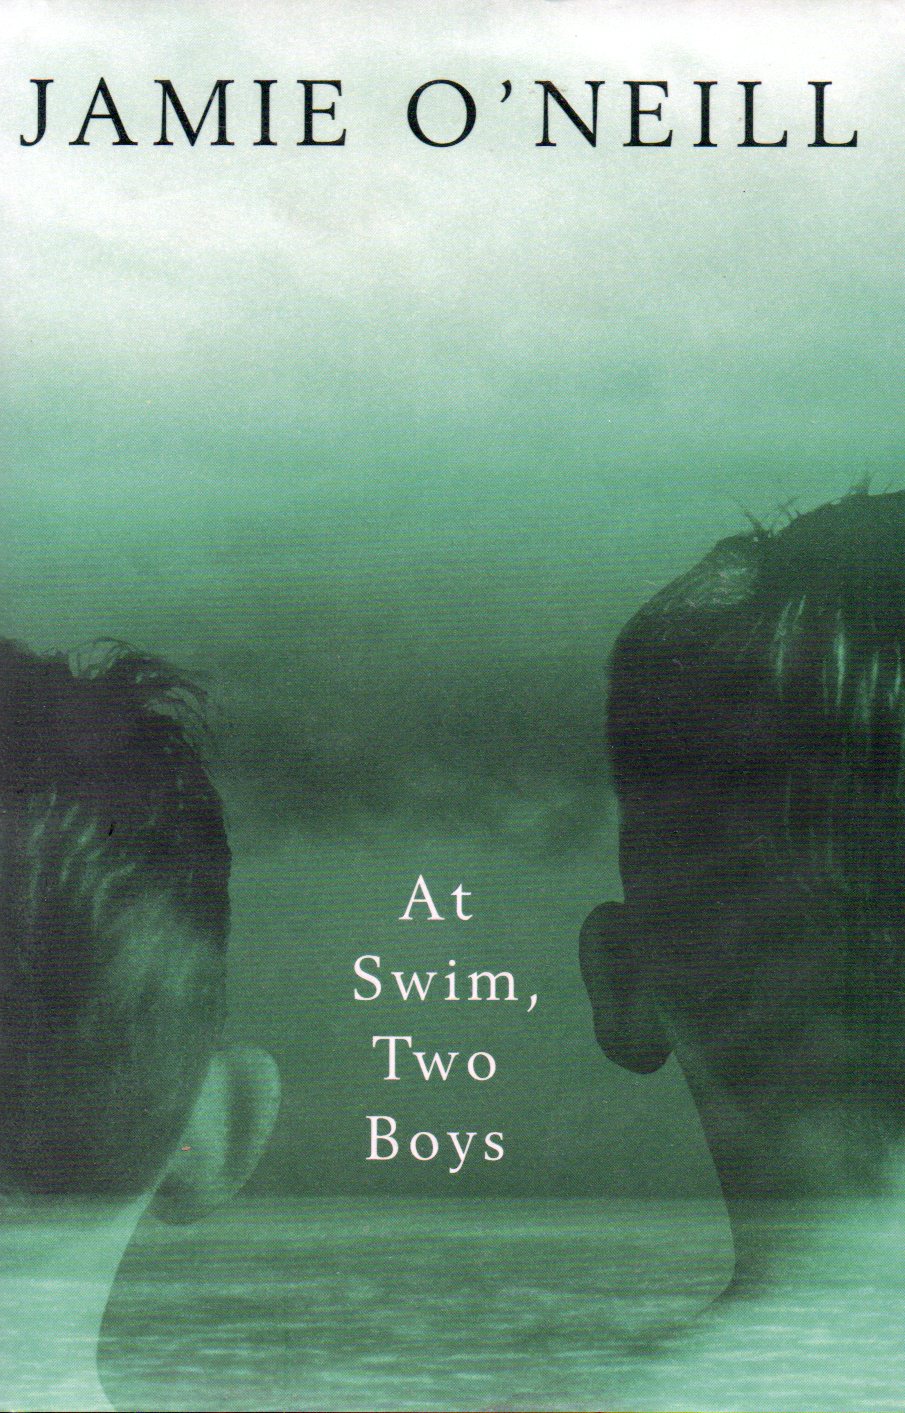 Jamie O'Neill's At Swim, Two Boys